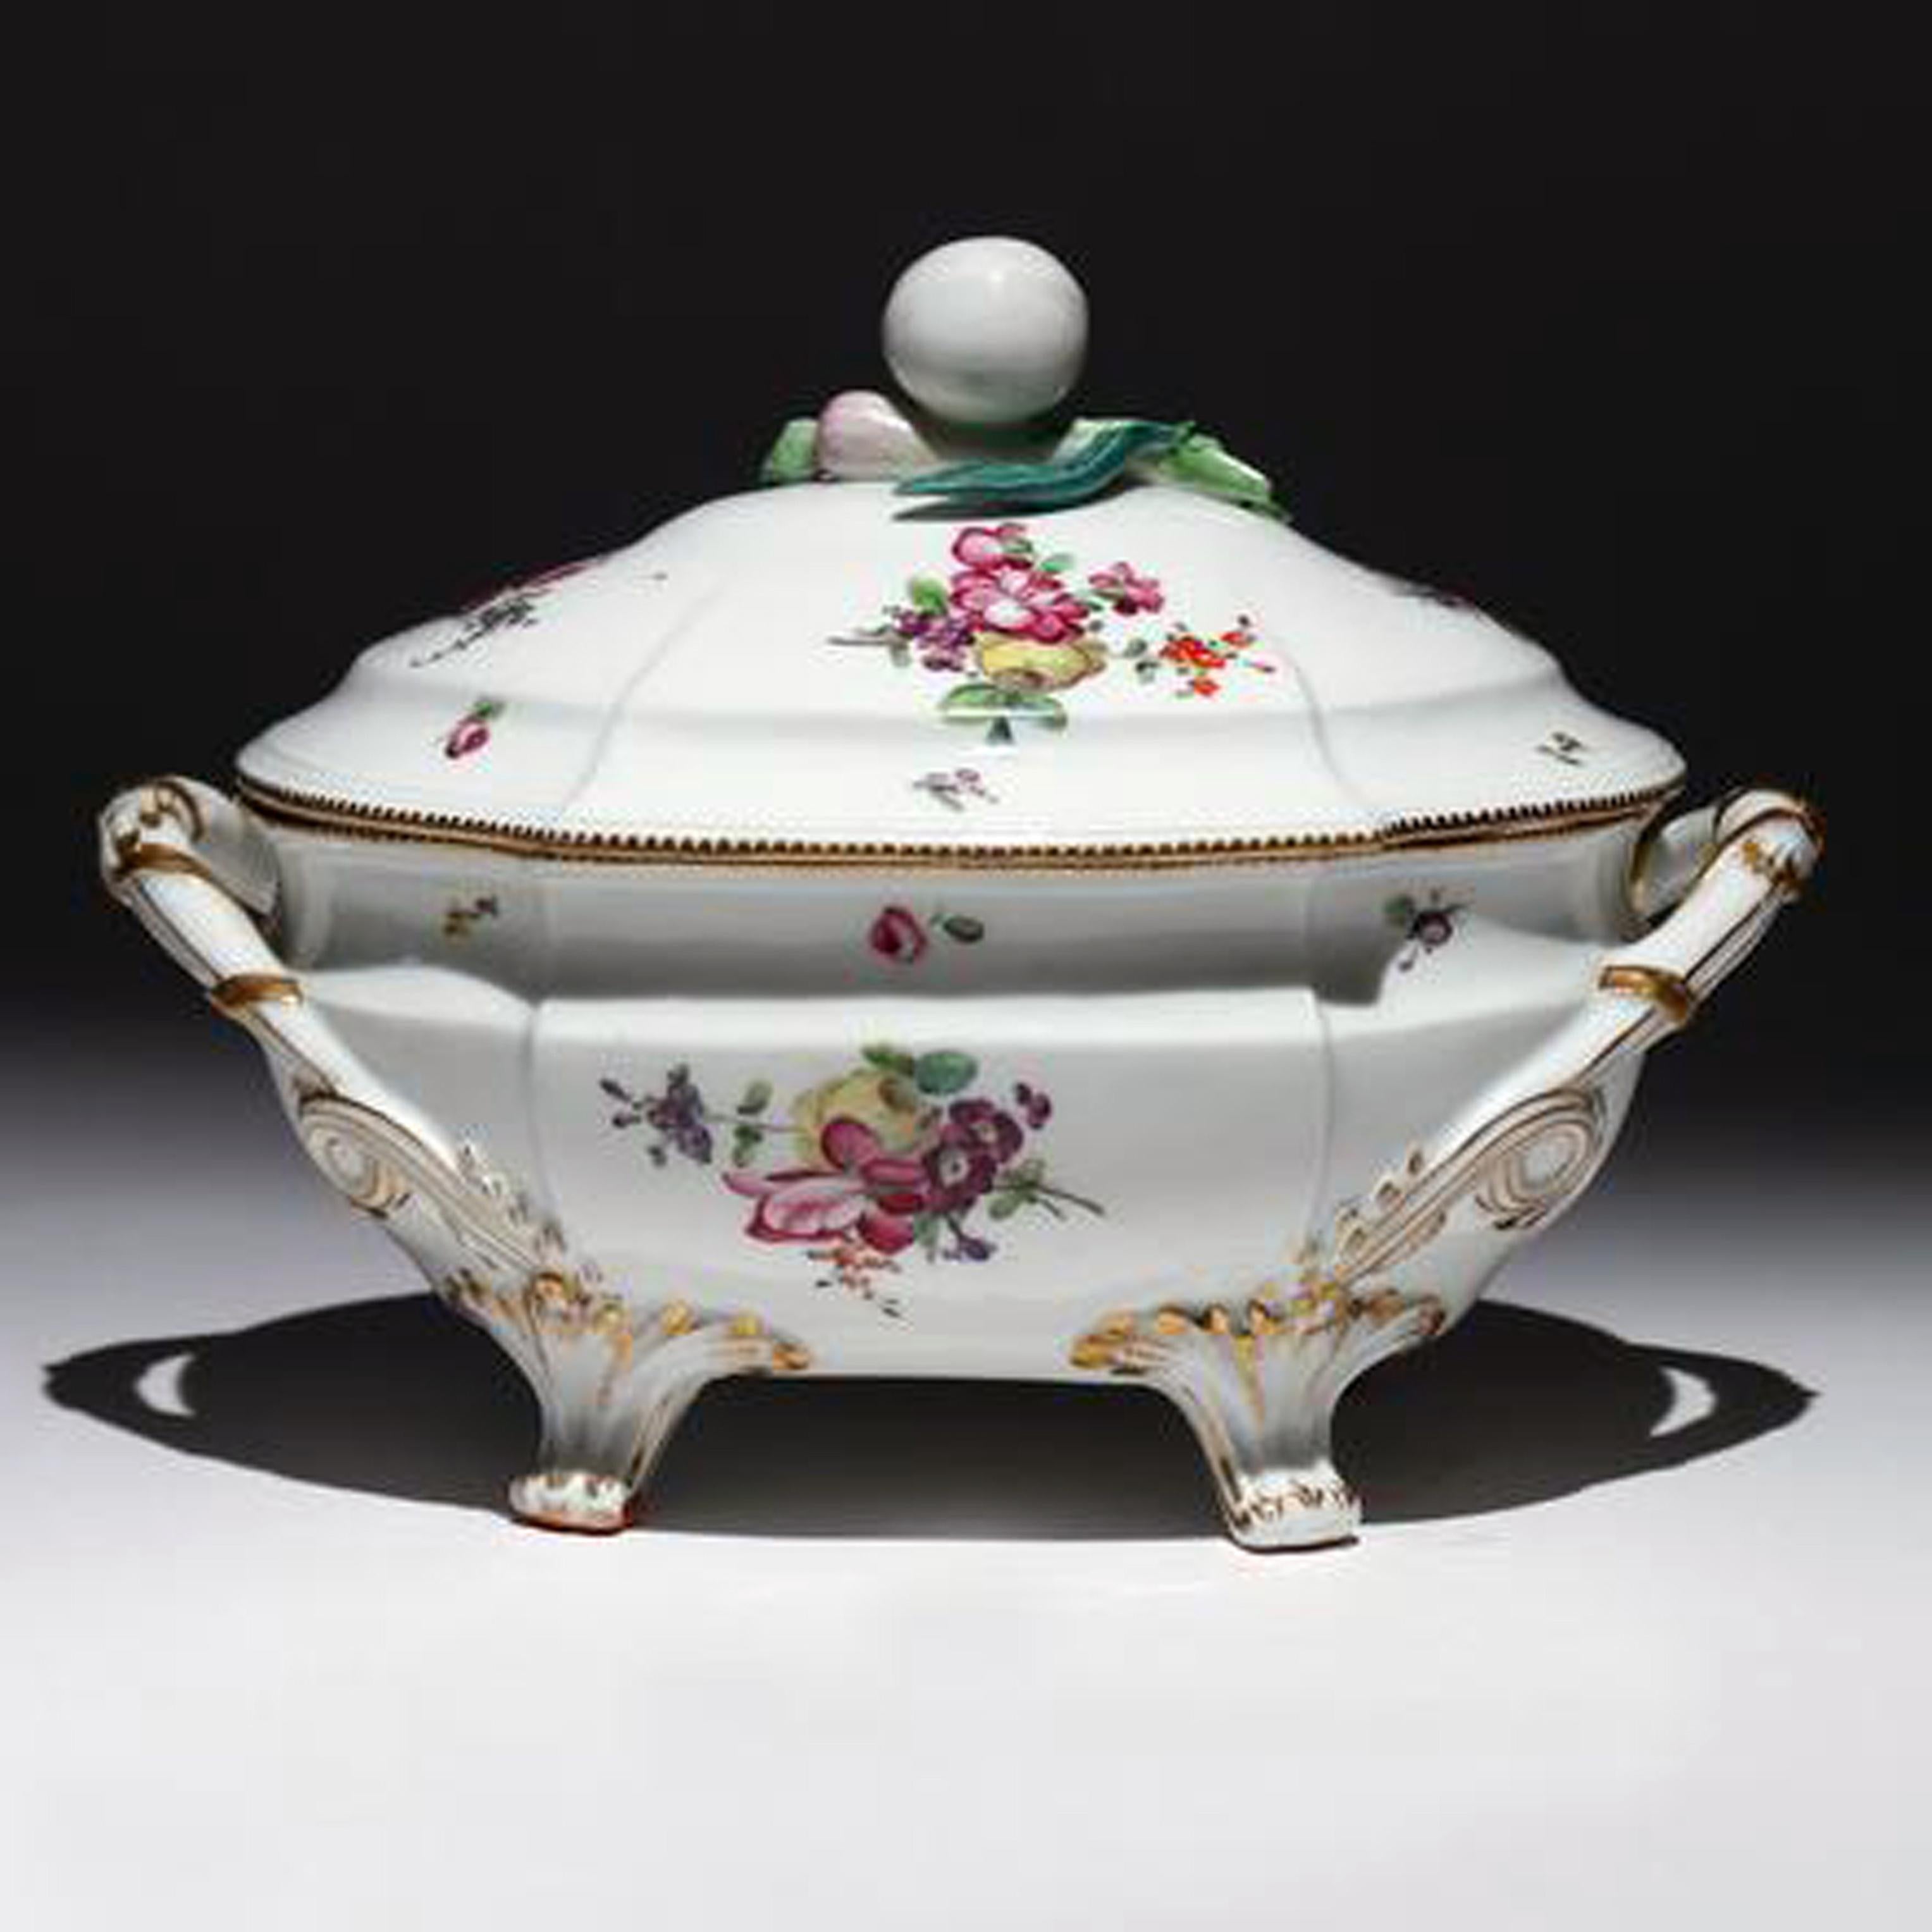 18th Century French Porcelain Soup Tureen and Cover, Jacques Vermonet & Fils, Boissettes